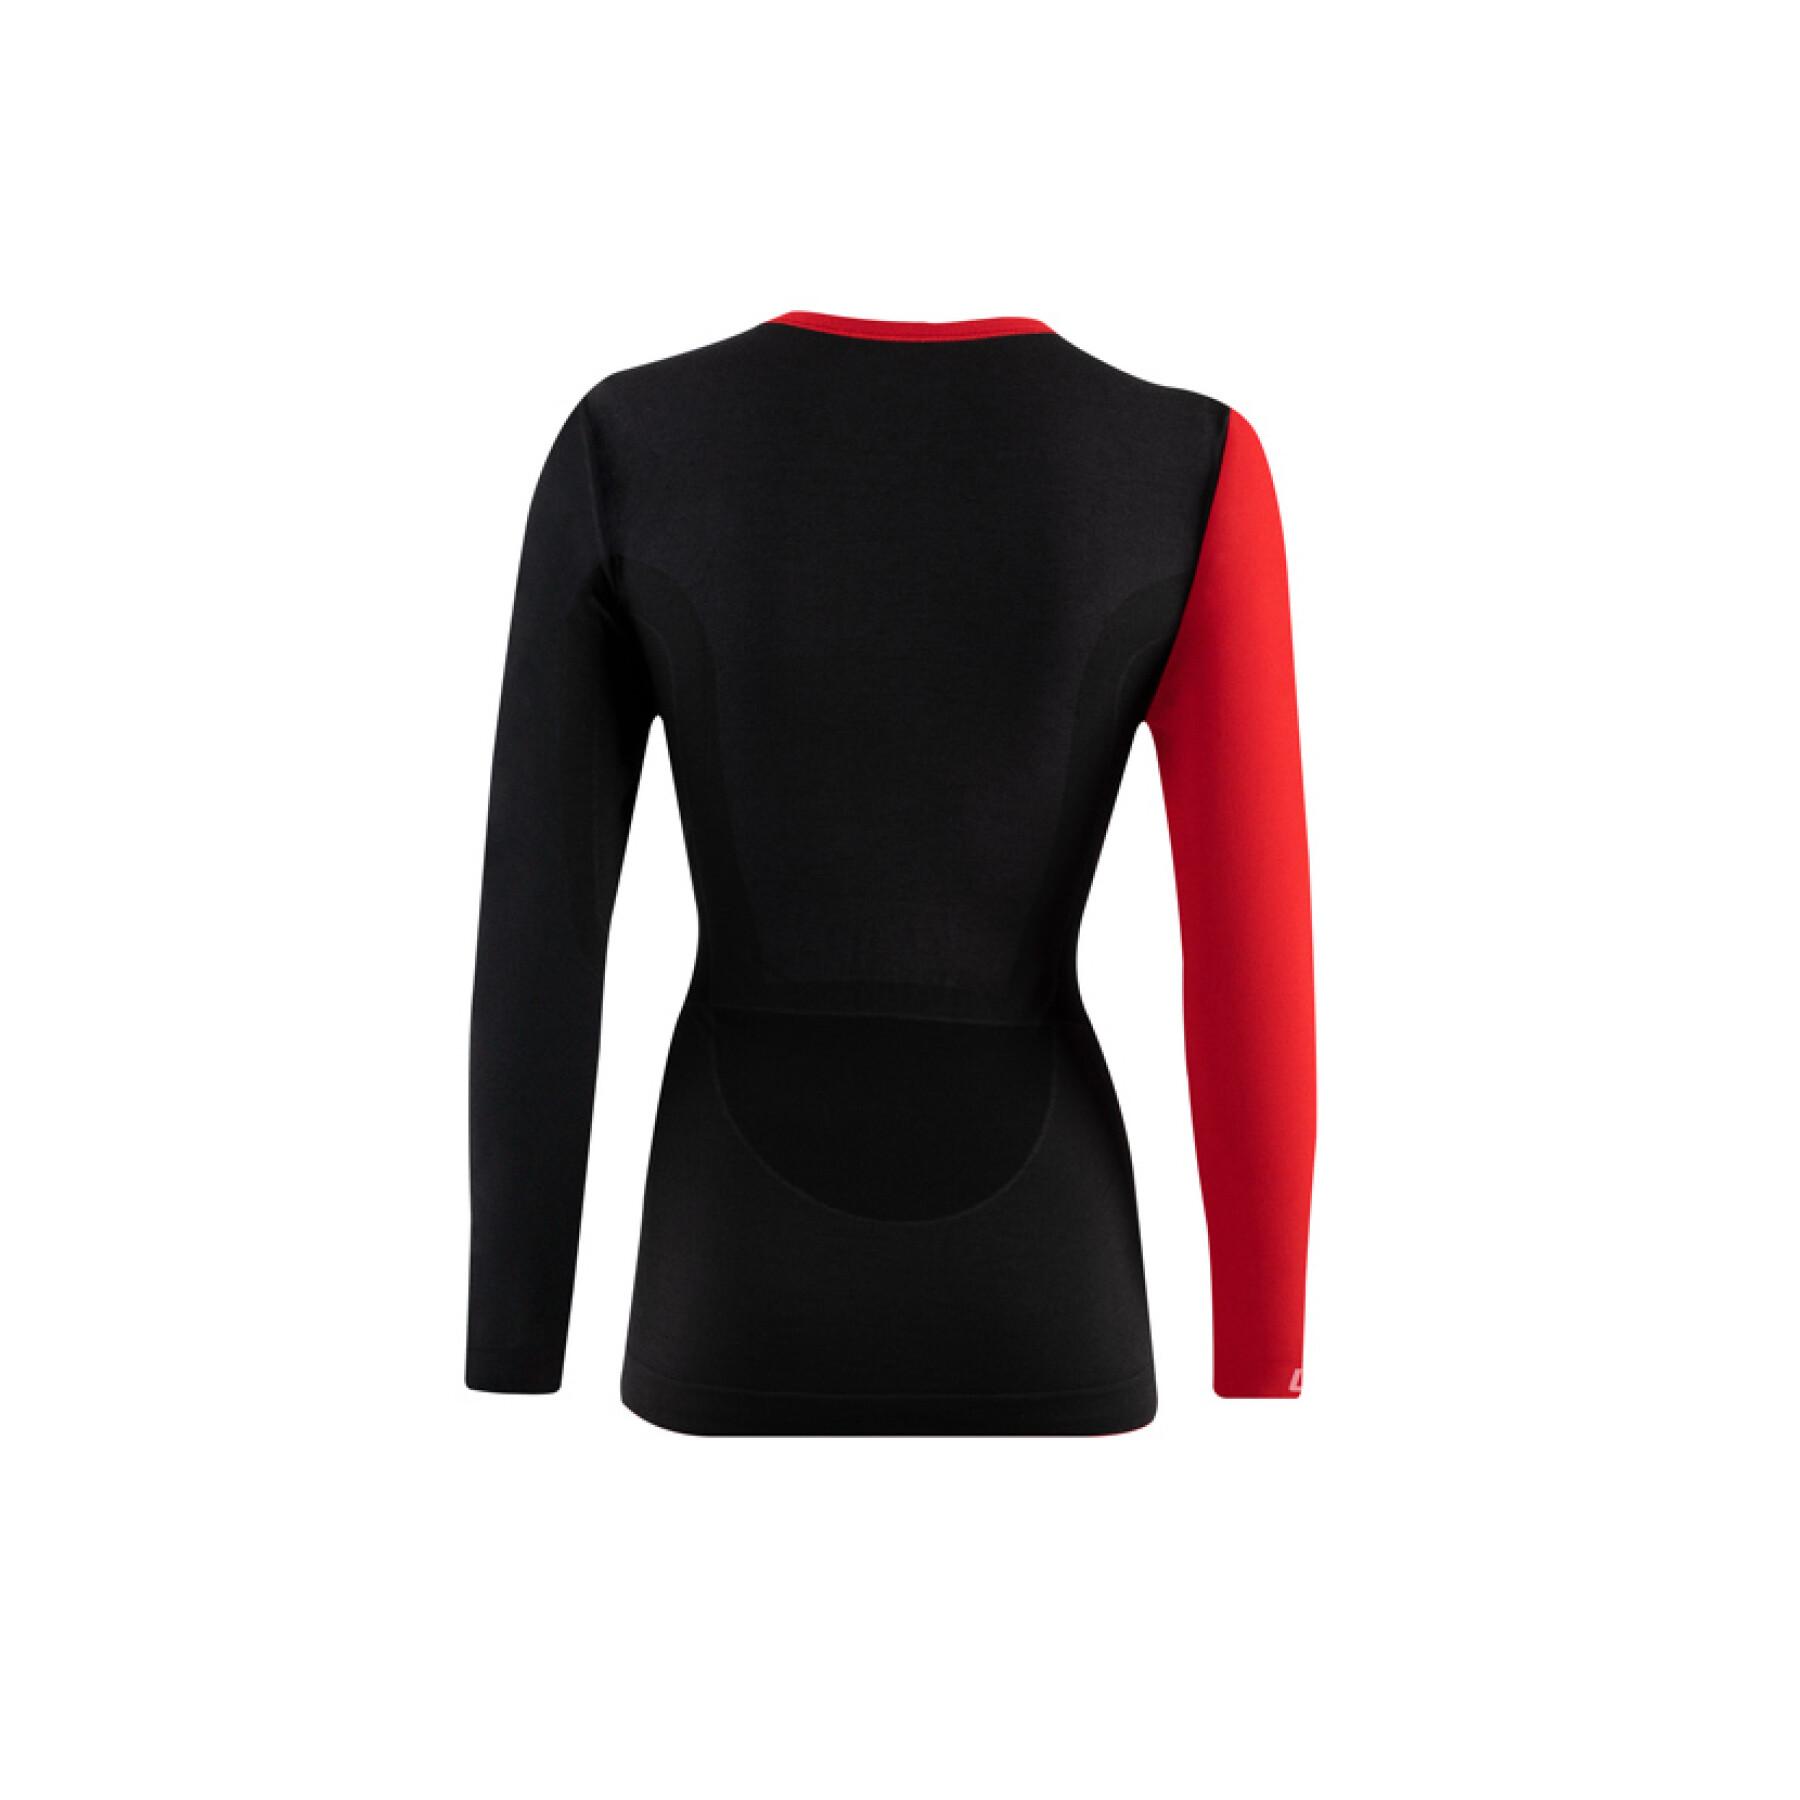 Women's long-sleeved undershirt with round neck Lenz Merino 6.0